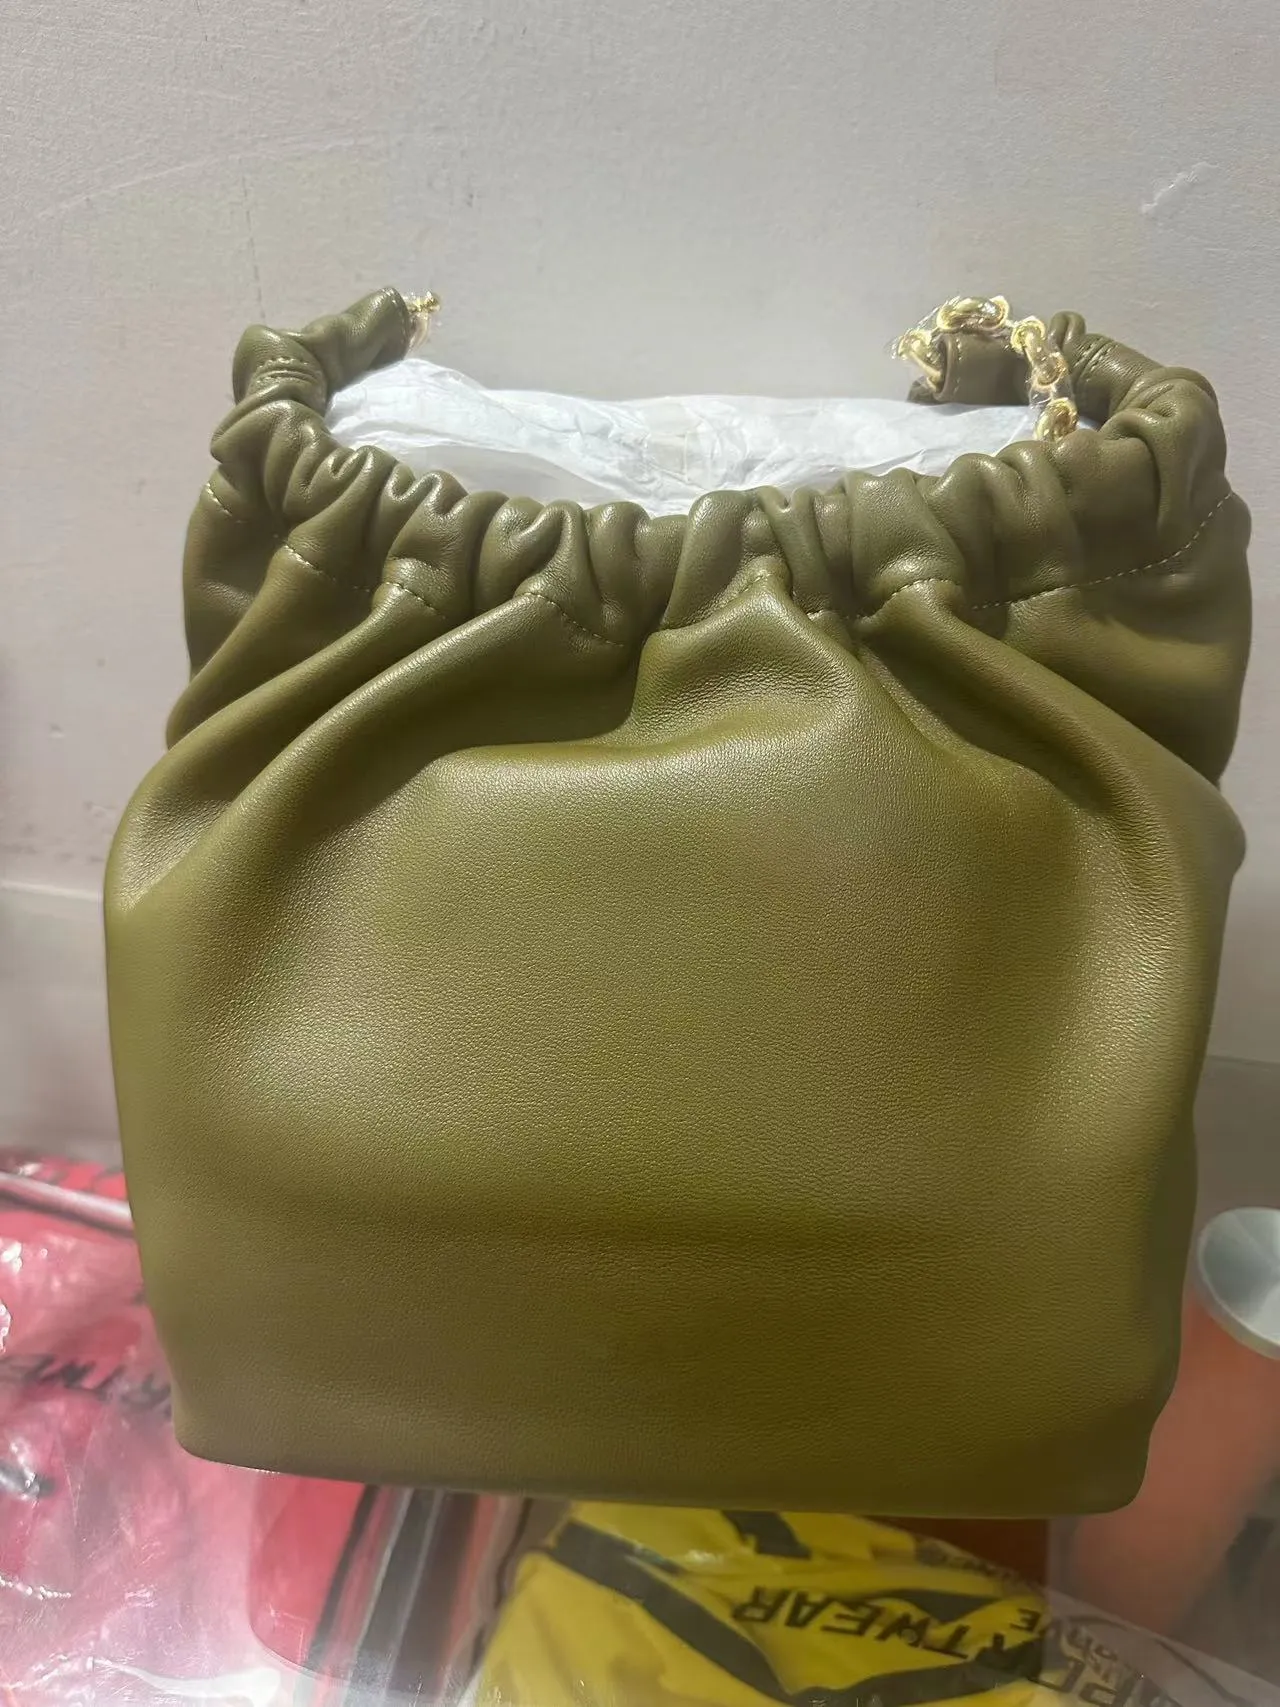 Nappa sheepskin Squeeze Totes shoulder bag underarm bag top leather fashion accessories tote bag new style arrive designer bag wallet purse handbag